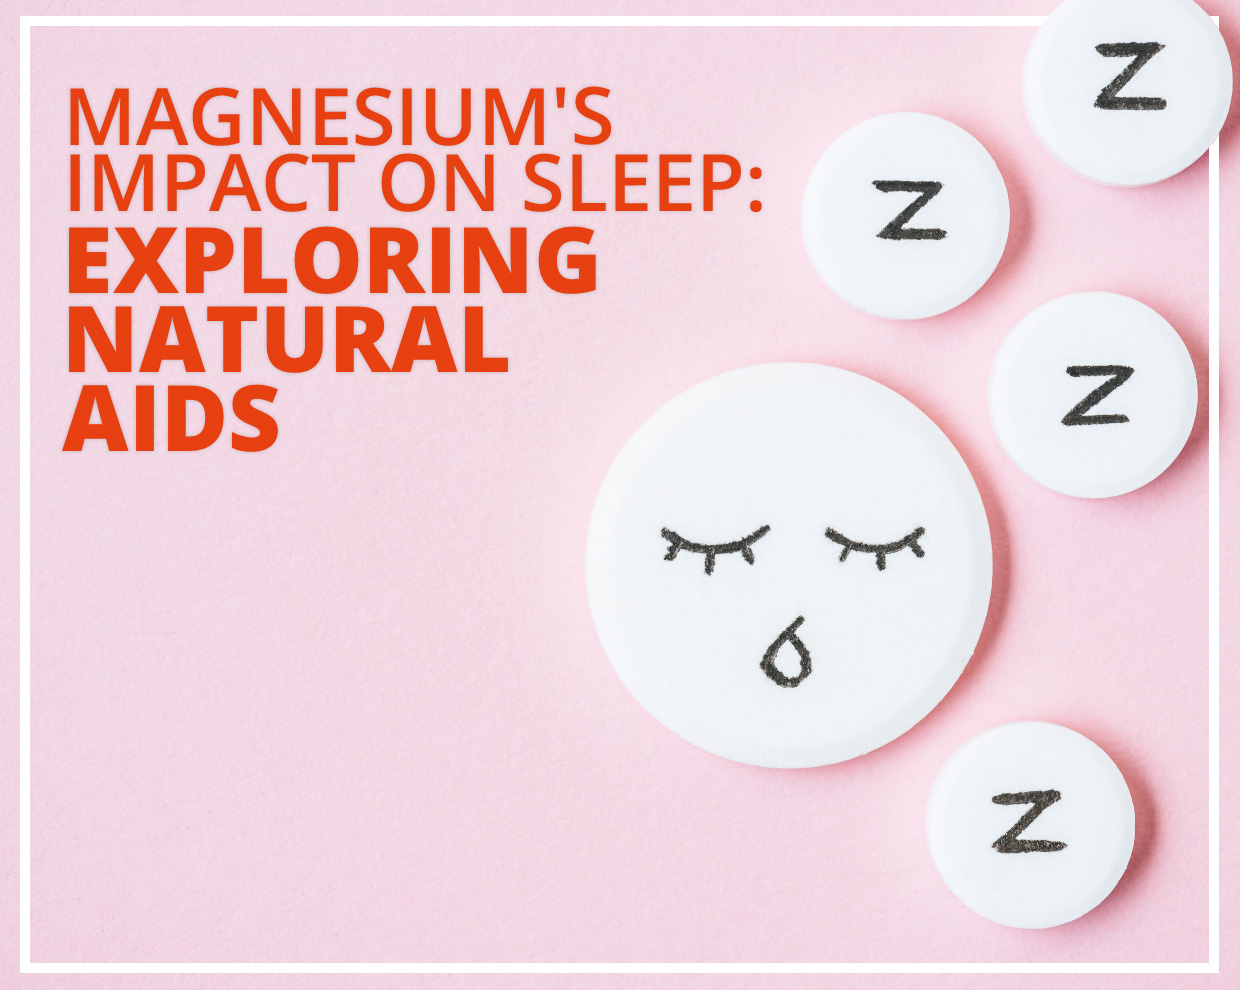 Magnesium's Impact on Sleep: Exploring Natural Aids